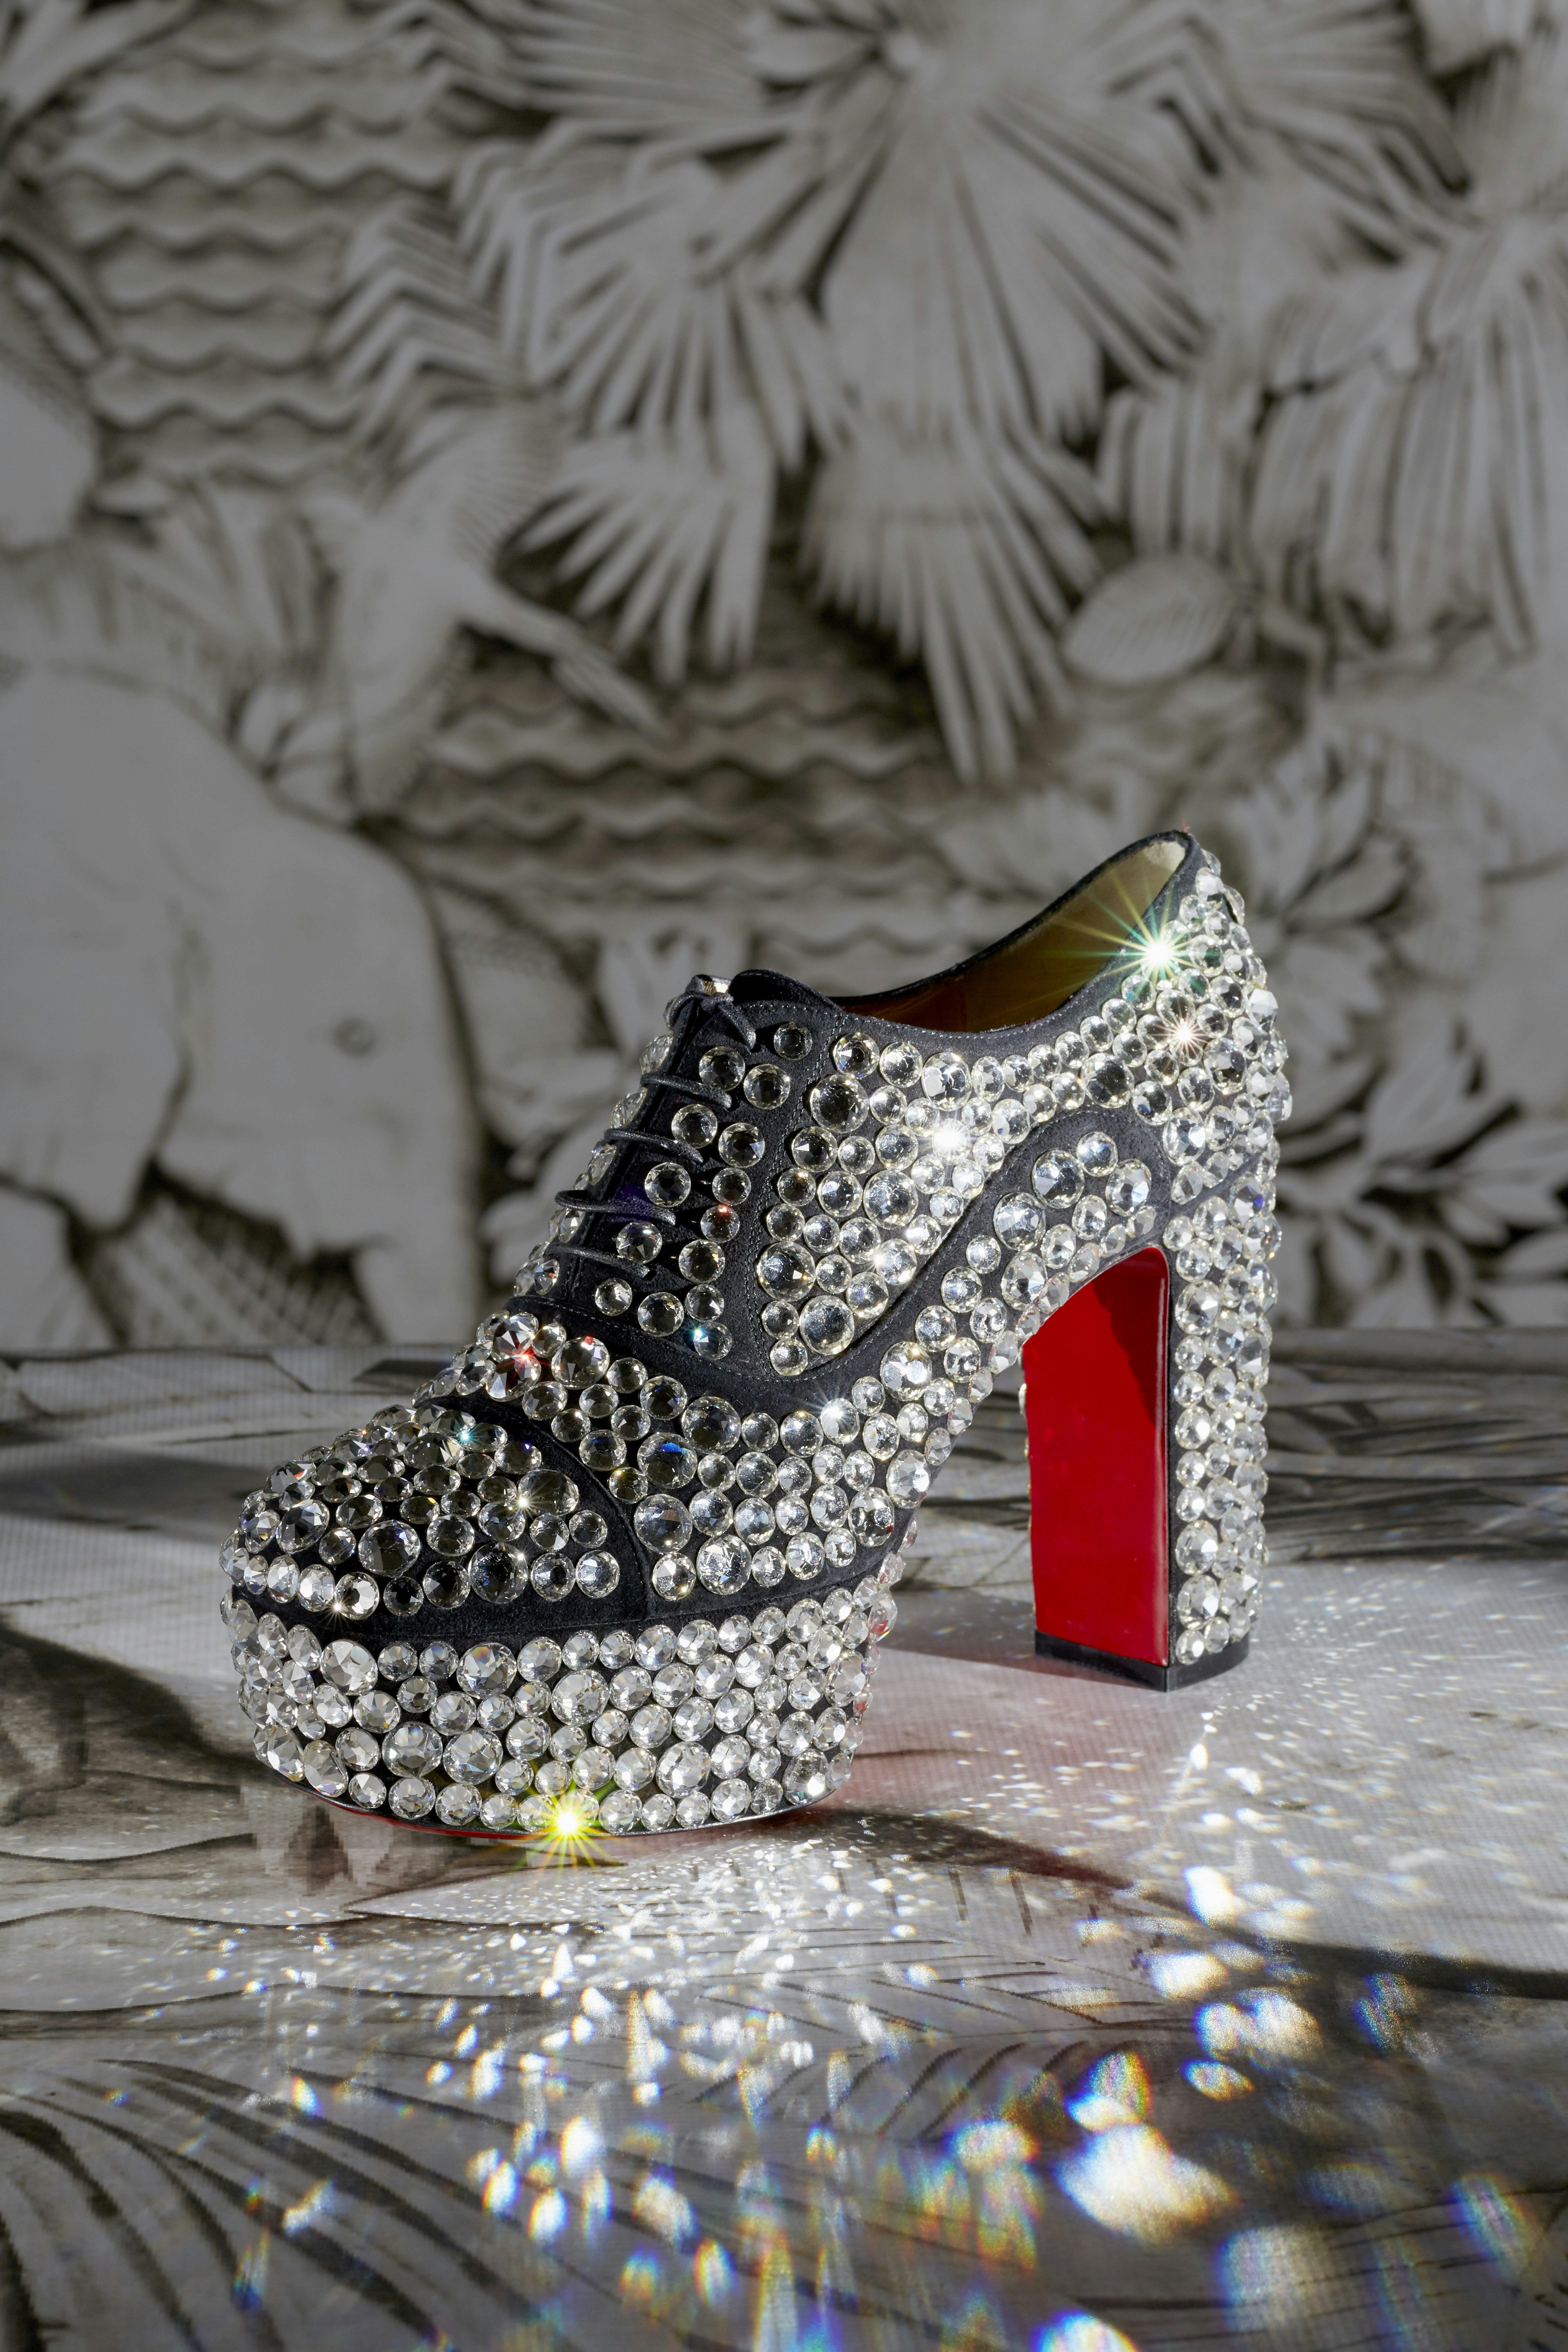 Christian Louboutin's Royal Strass shoe 